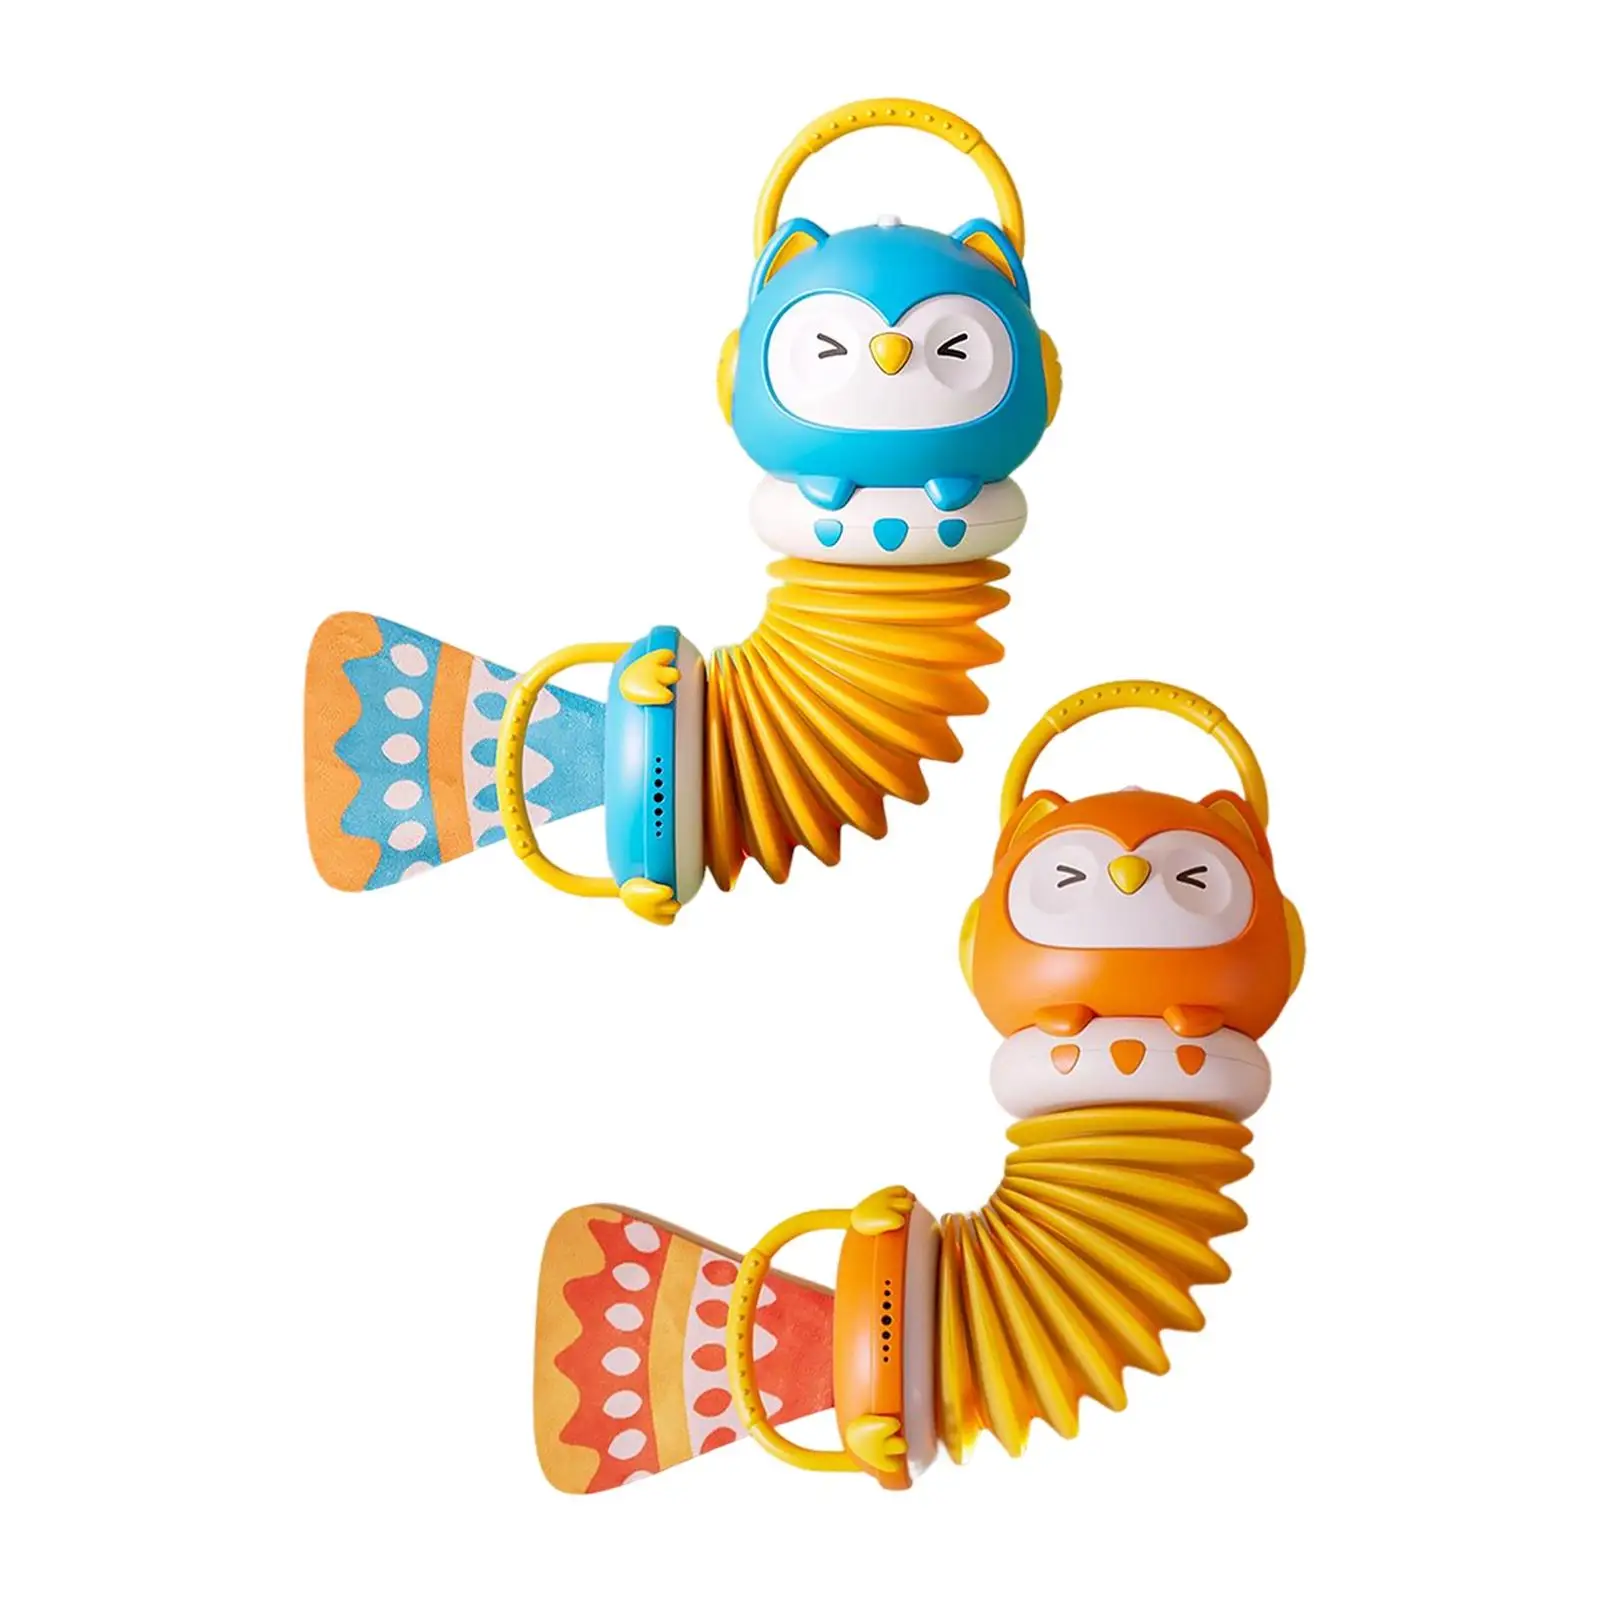 Baby Accordion Toy Developmental Music Enlightenment Montessori Educational Stroller Pendant Sensory Toy Plastic for Toddler